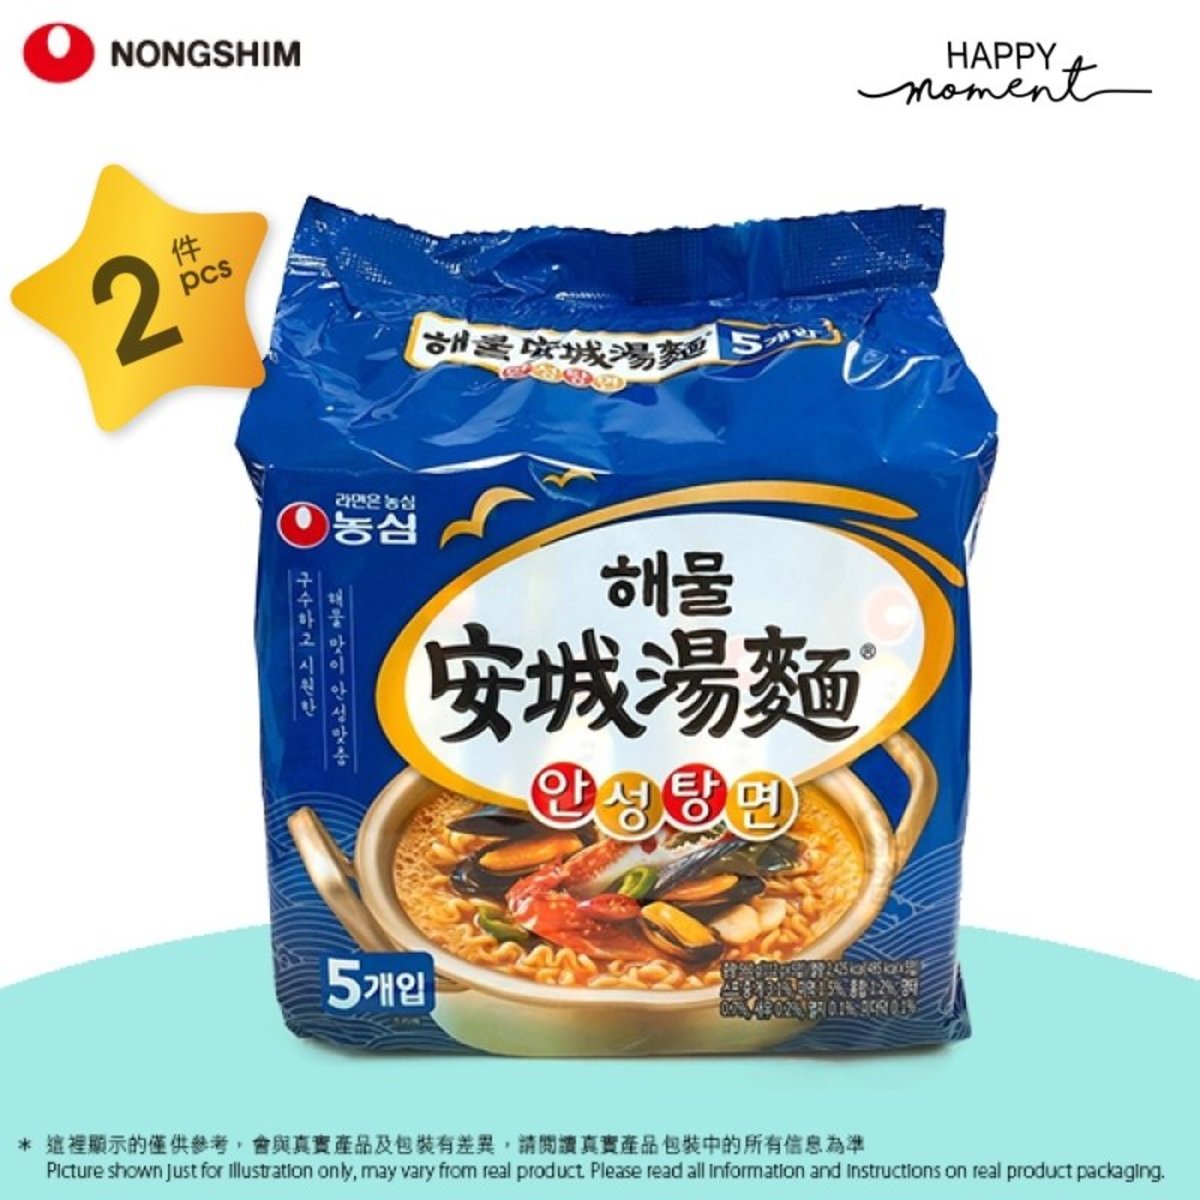 2包 - (藍色裝) 海鮮味 安城湯麵 五包裝 Seafood An Sung Soup Noodle(112g -5s) x2 